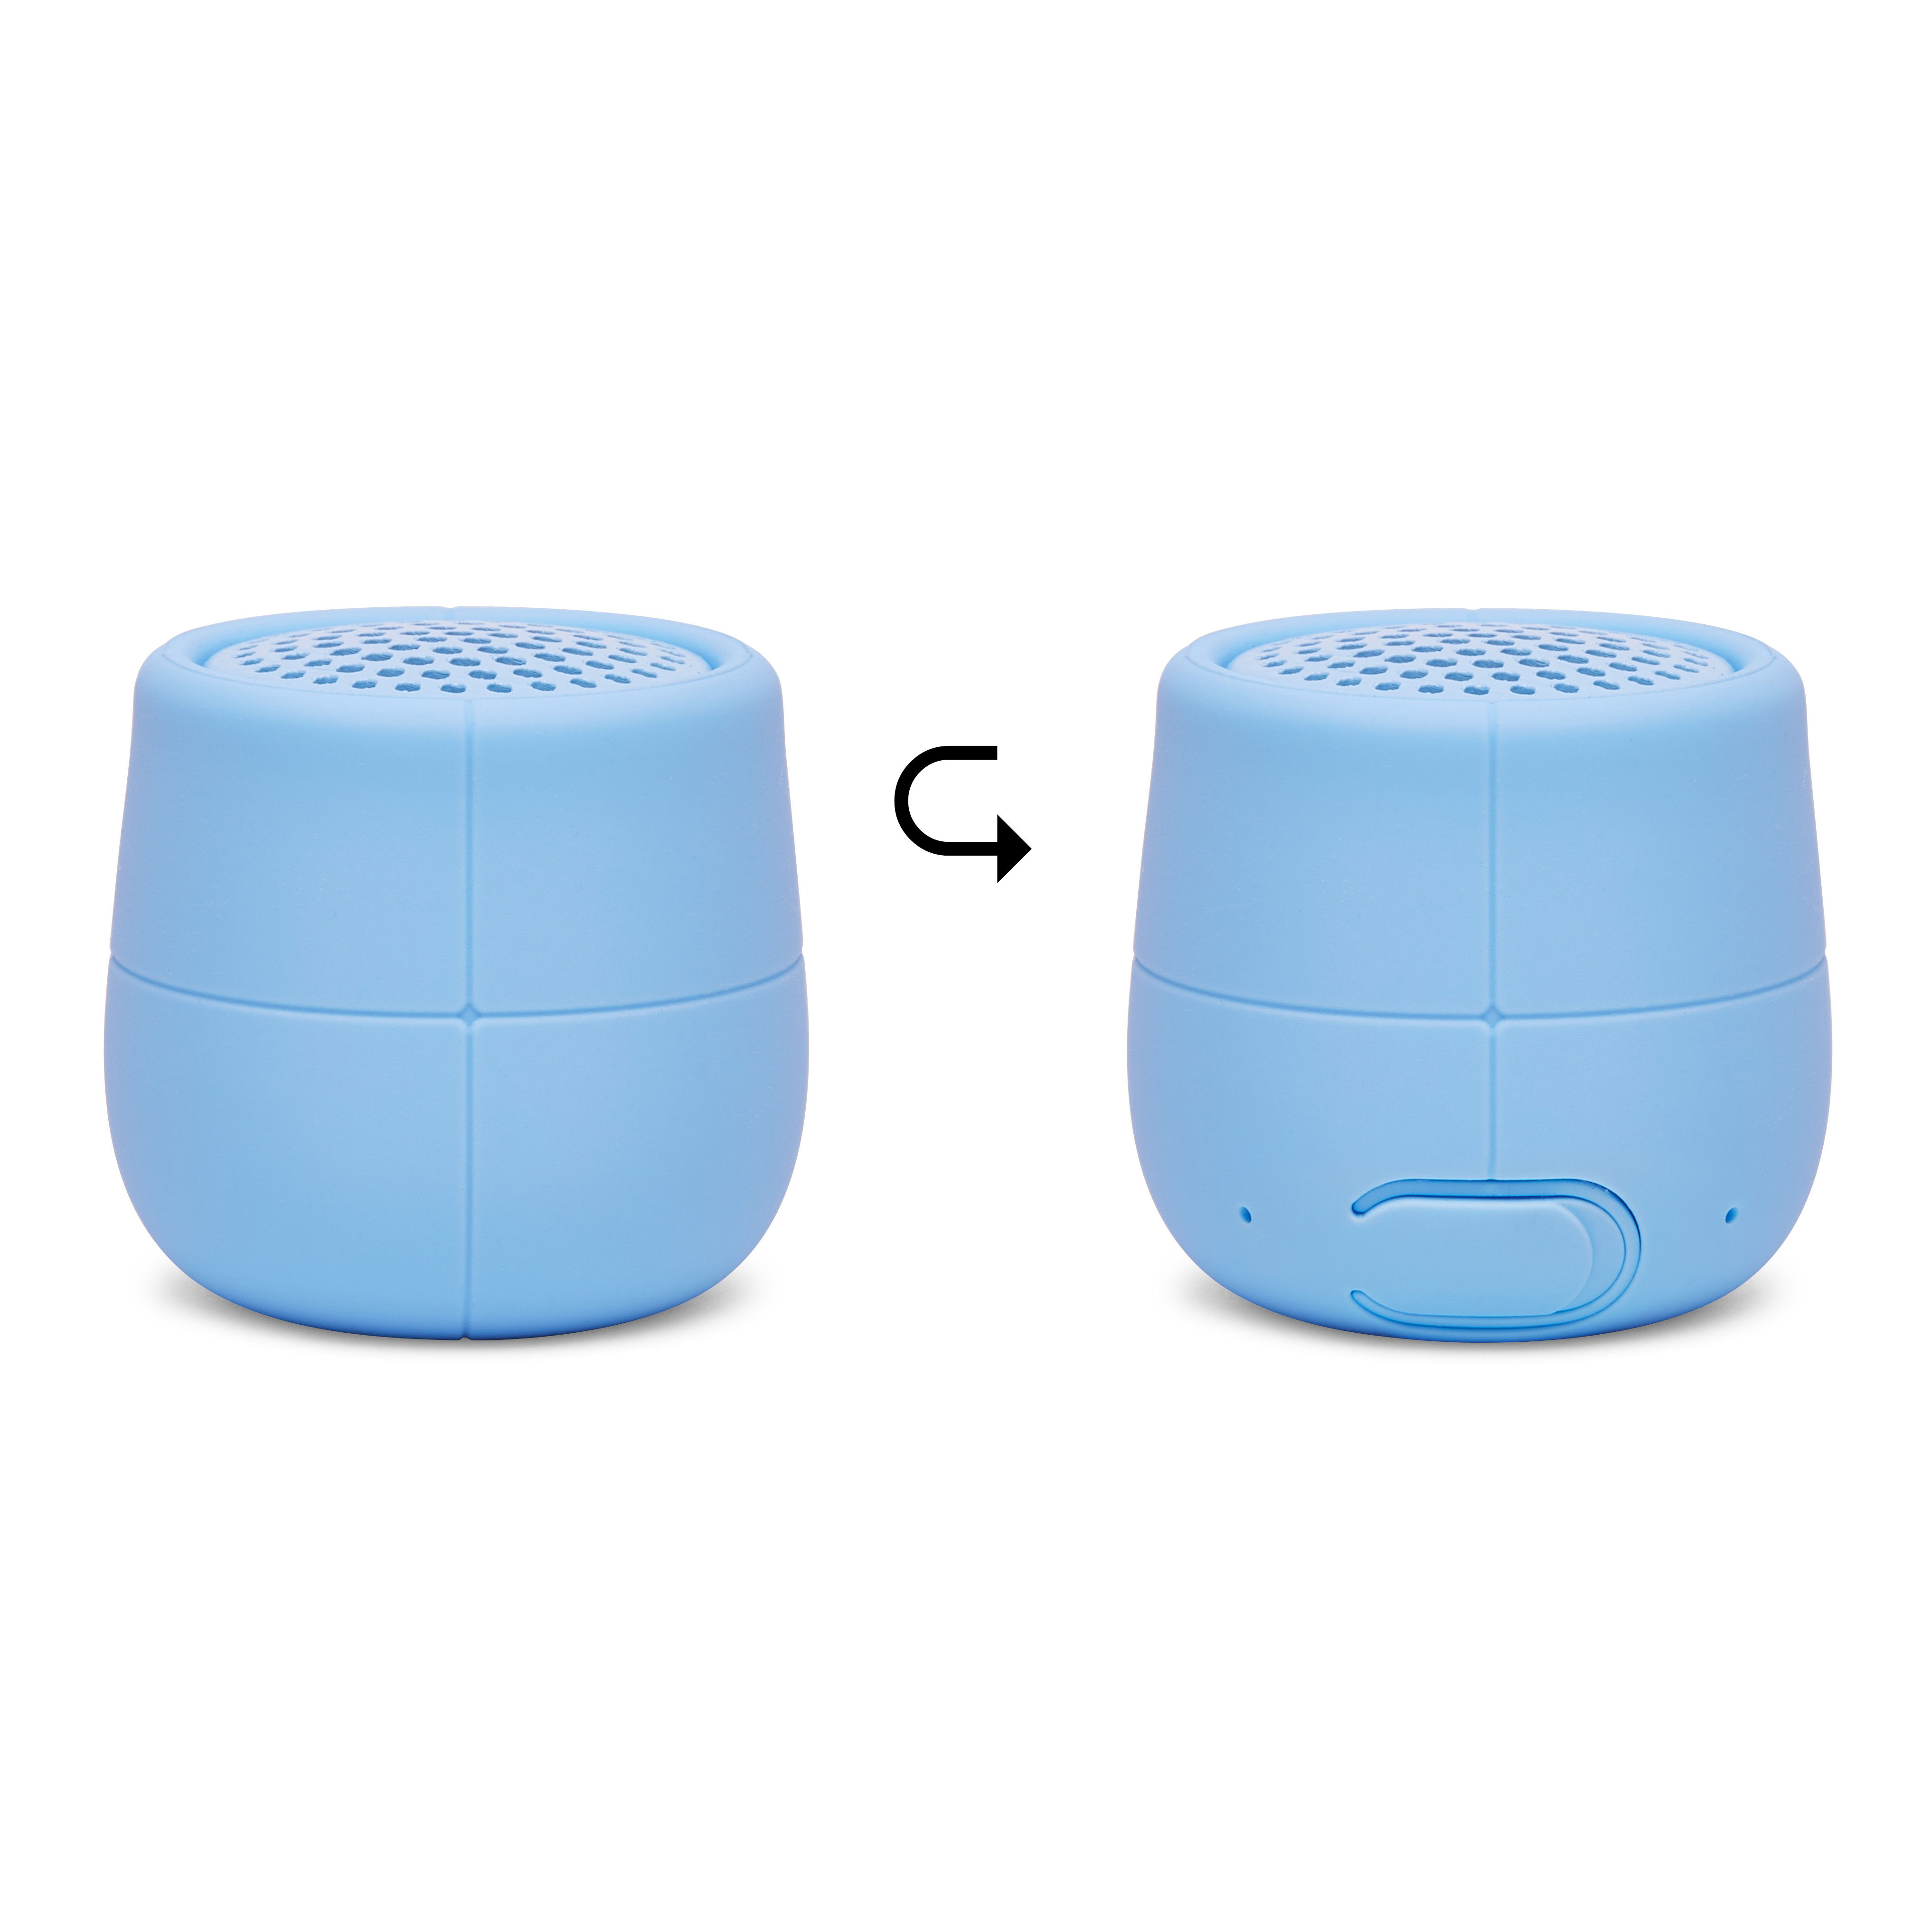 Lexon Mini Enceinte Bluetooth Portable MINO &, M…